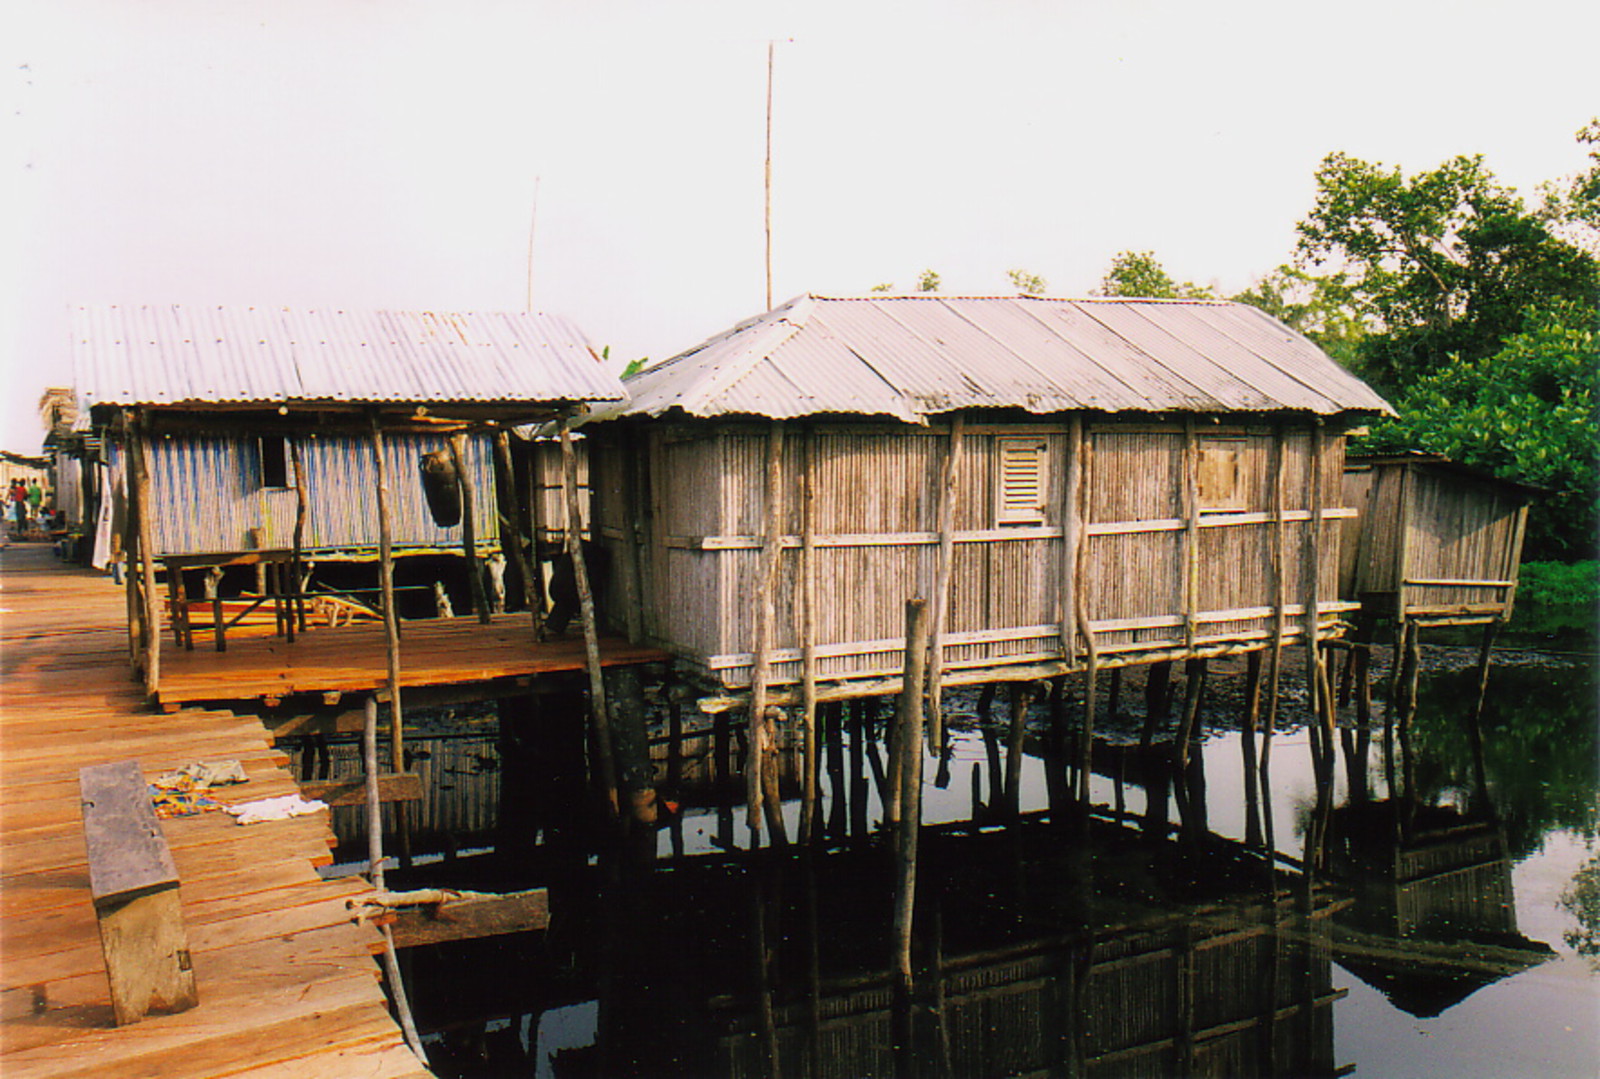 The chief's house, Nzulezo